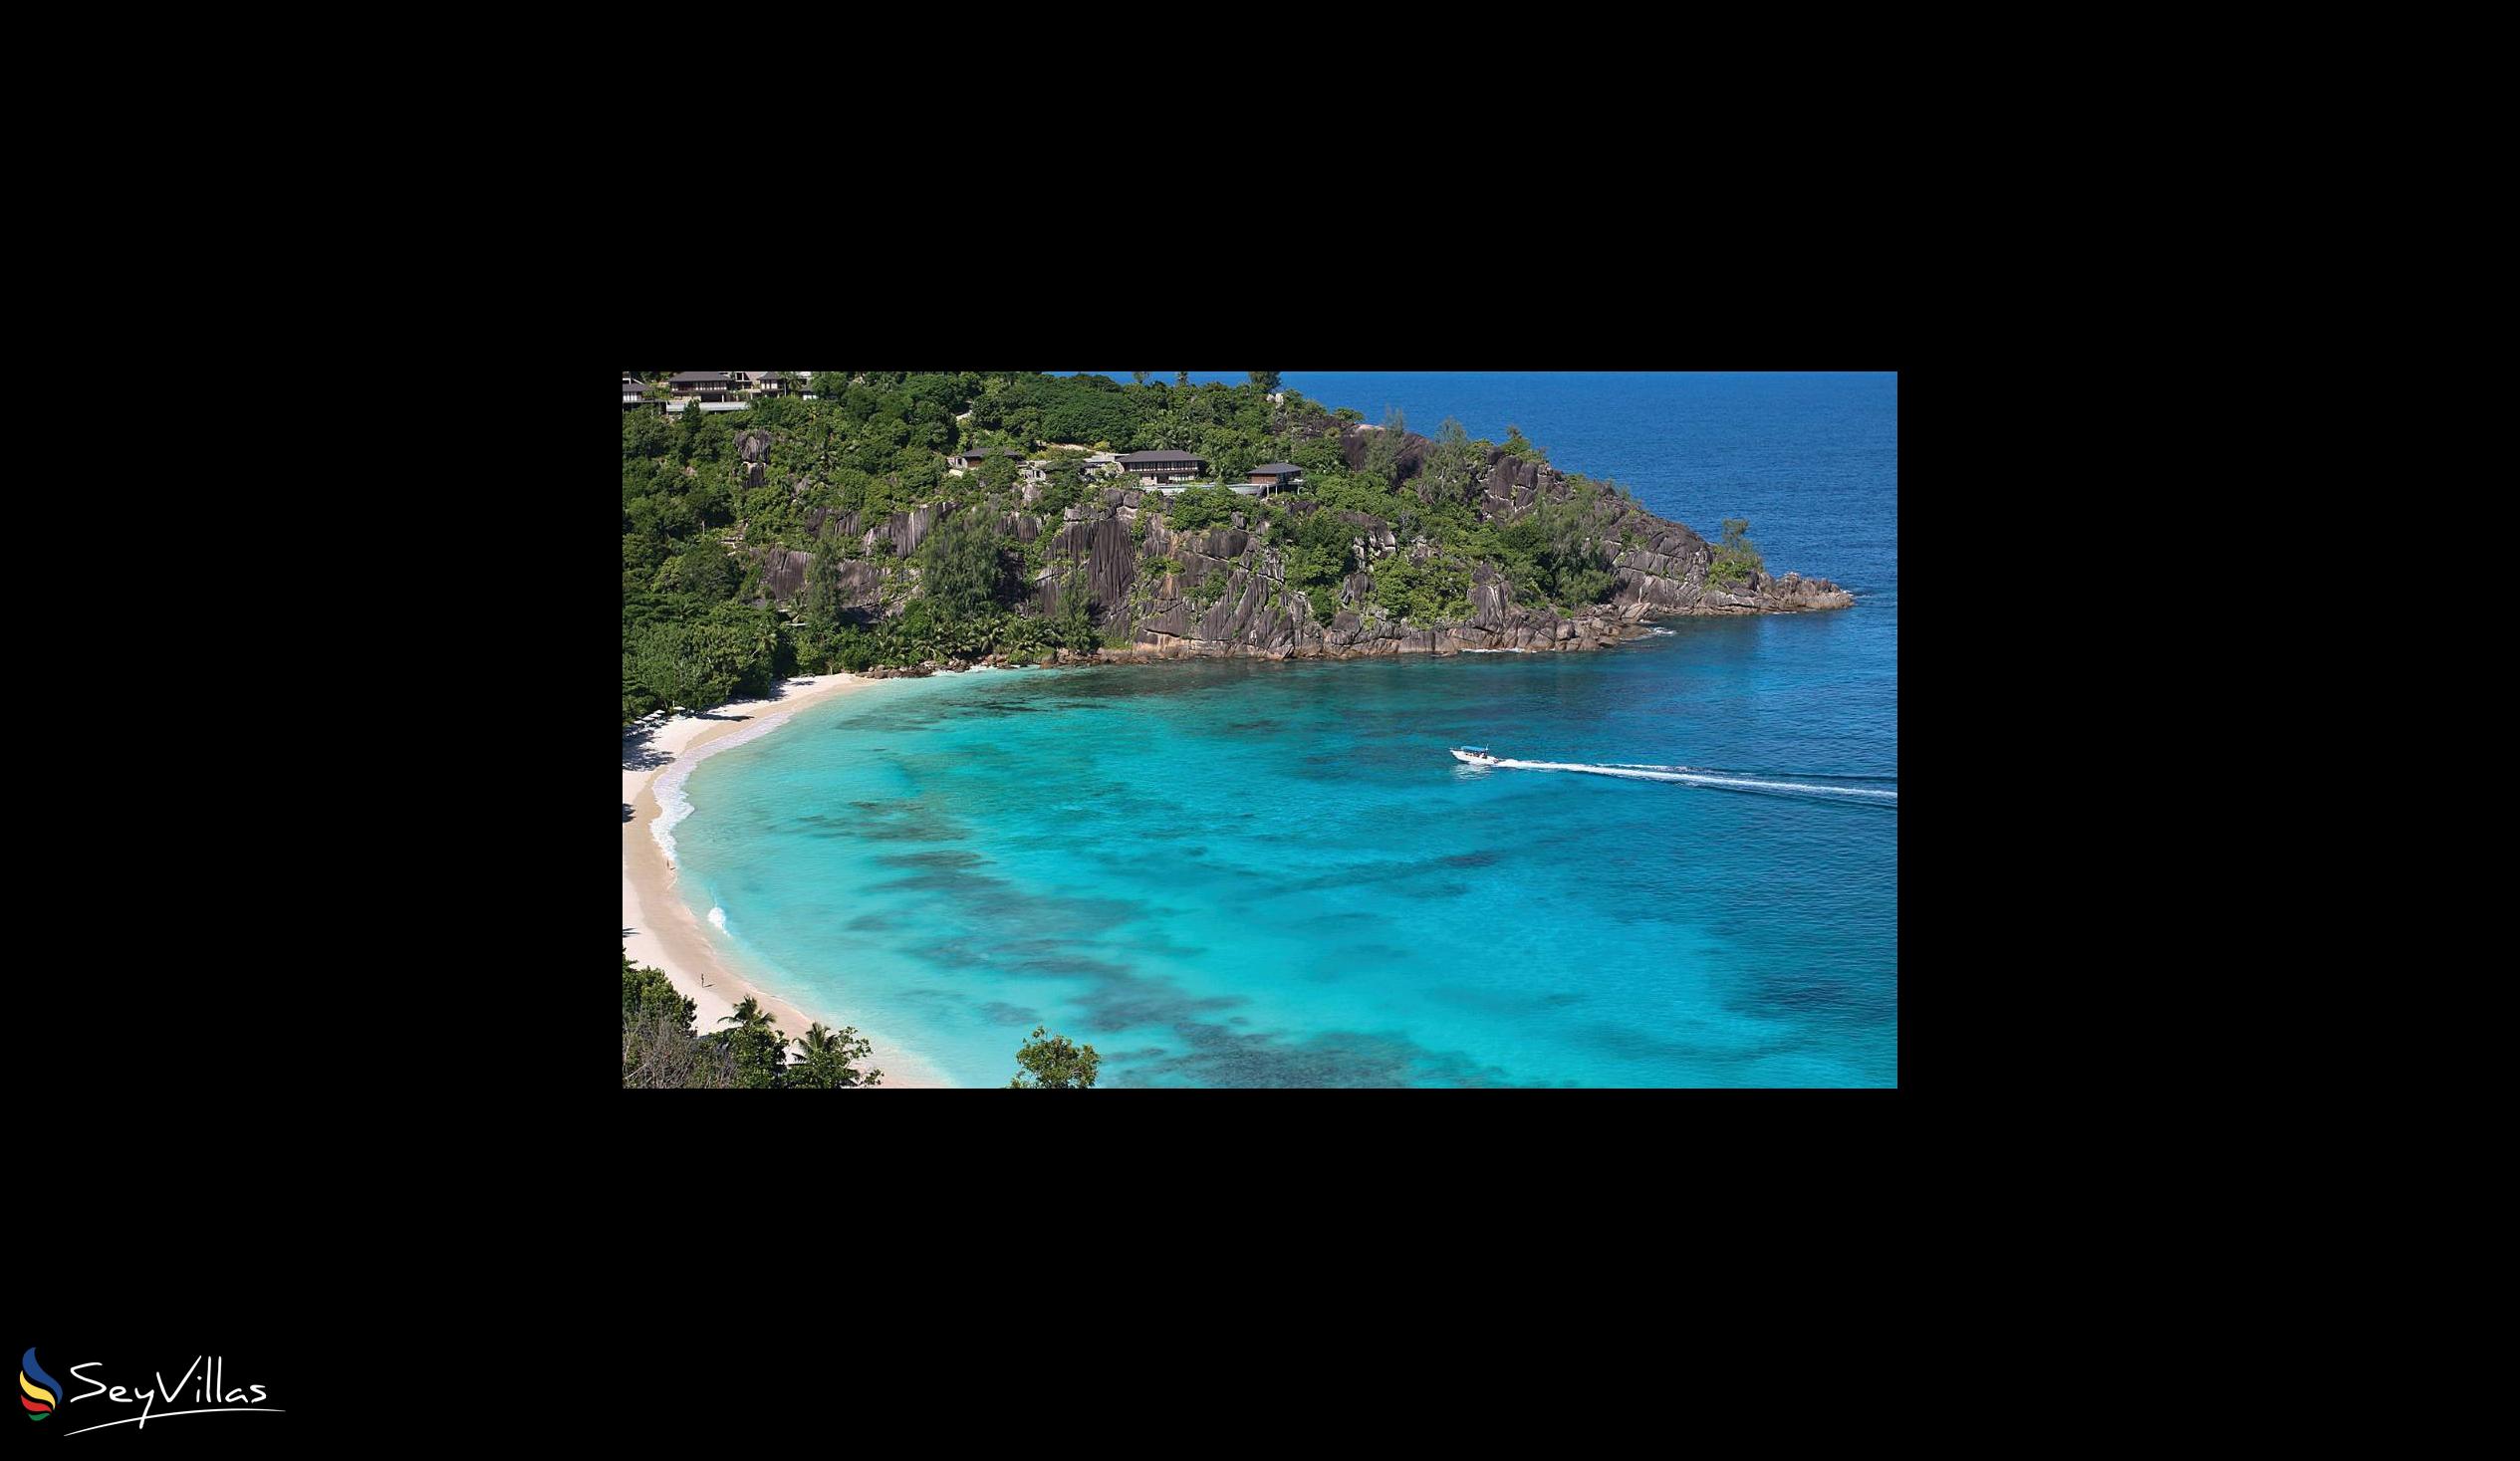 Foto 43: Four Seasons Resort - Posizione - Mahé (Seychelles)